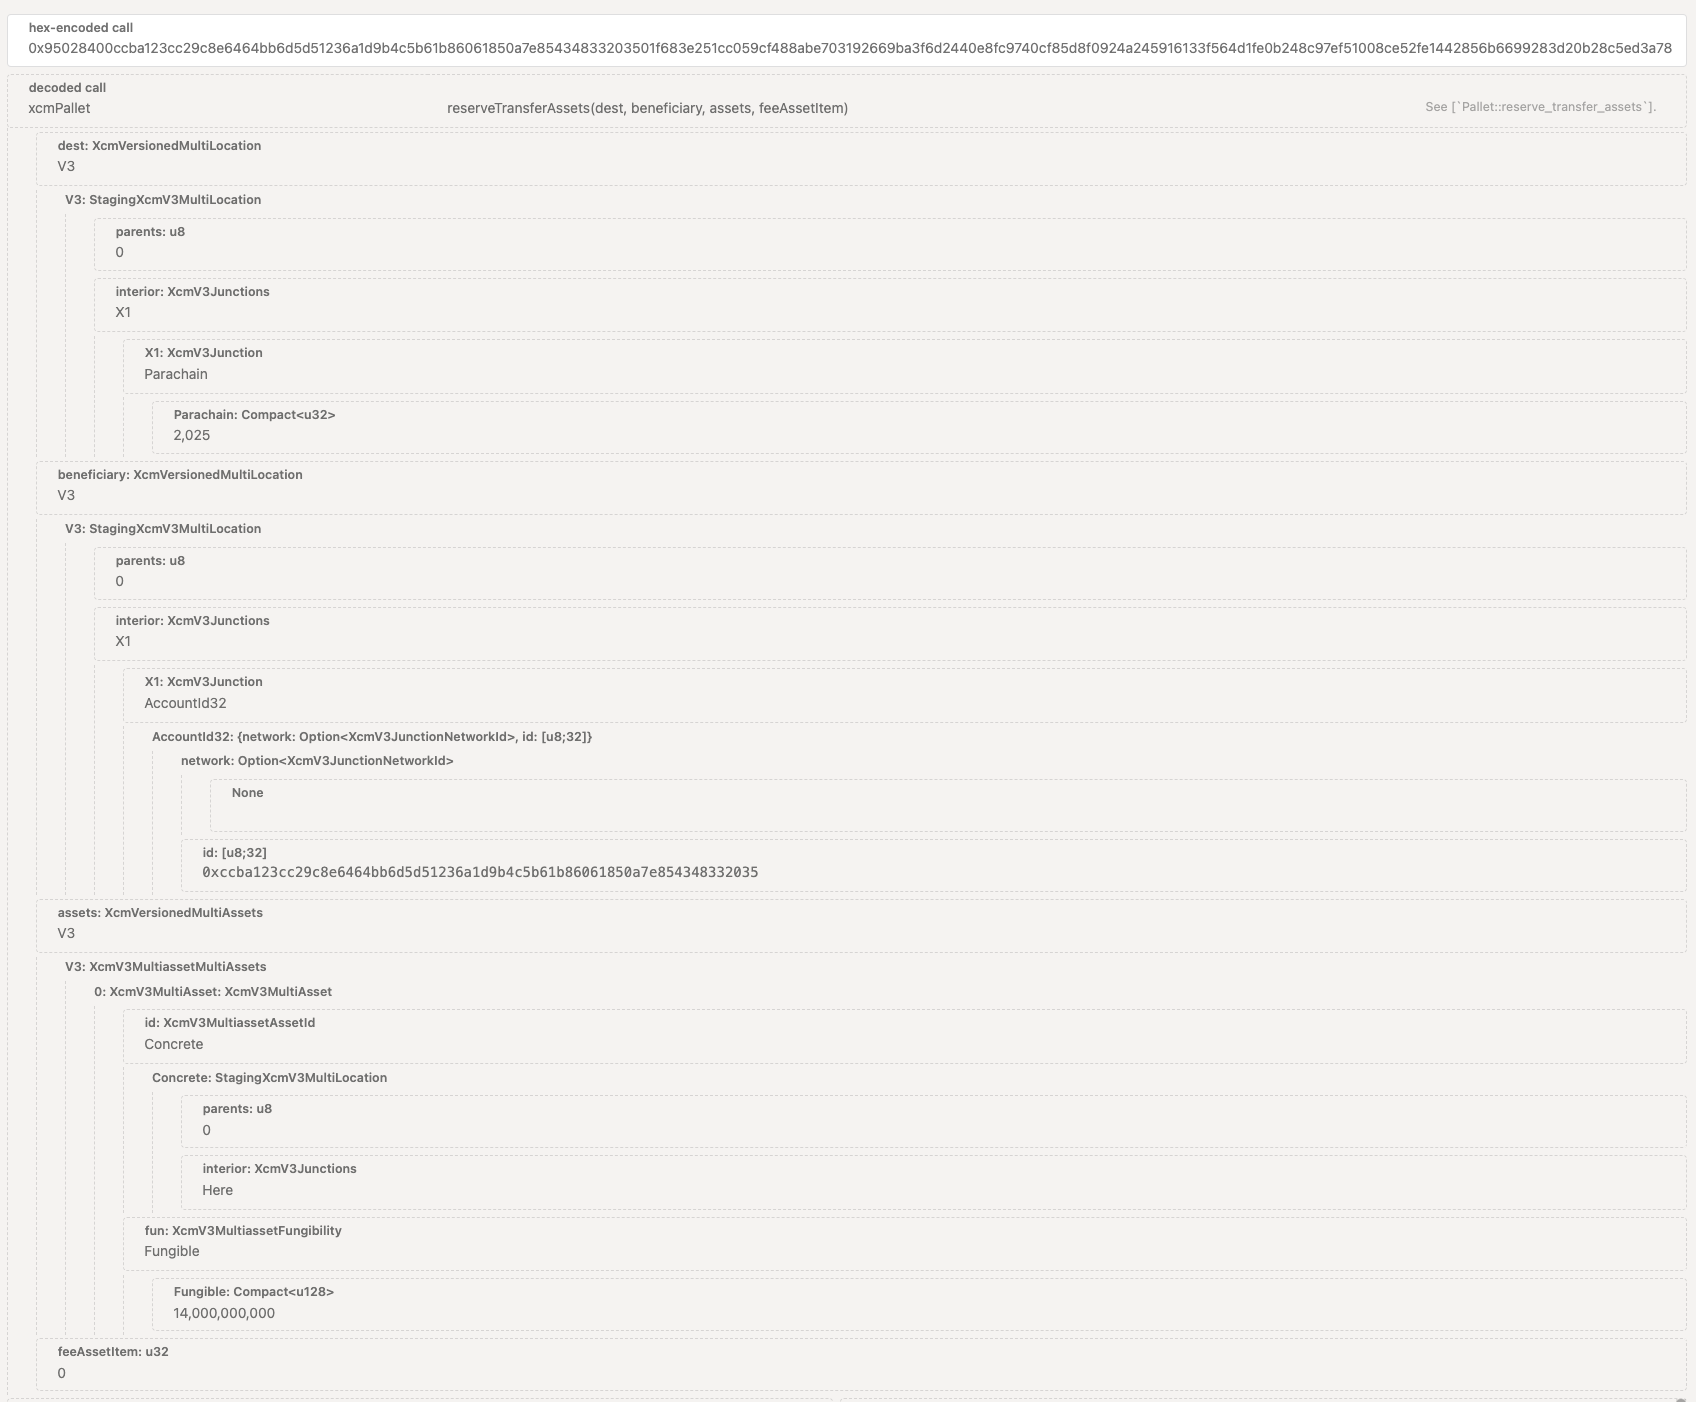 Imagen: Ejemplo de una transferencia de DOT al network Polkadot desde el mainnet de SORA